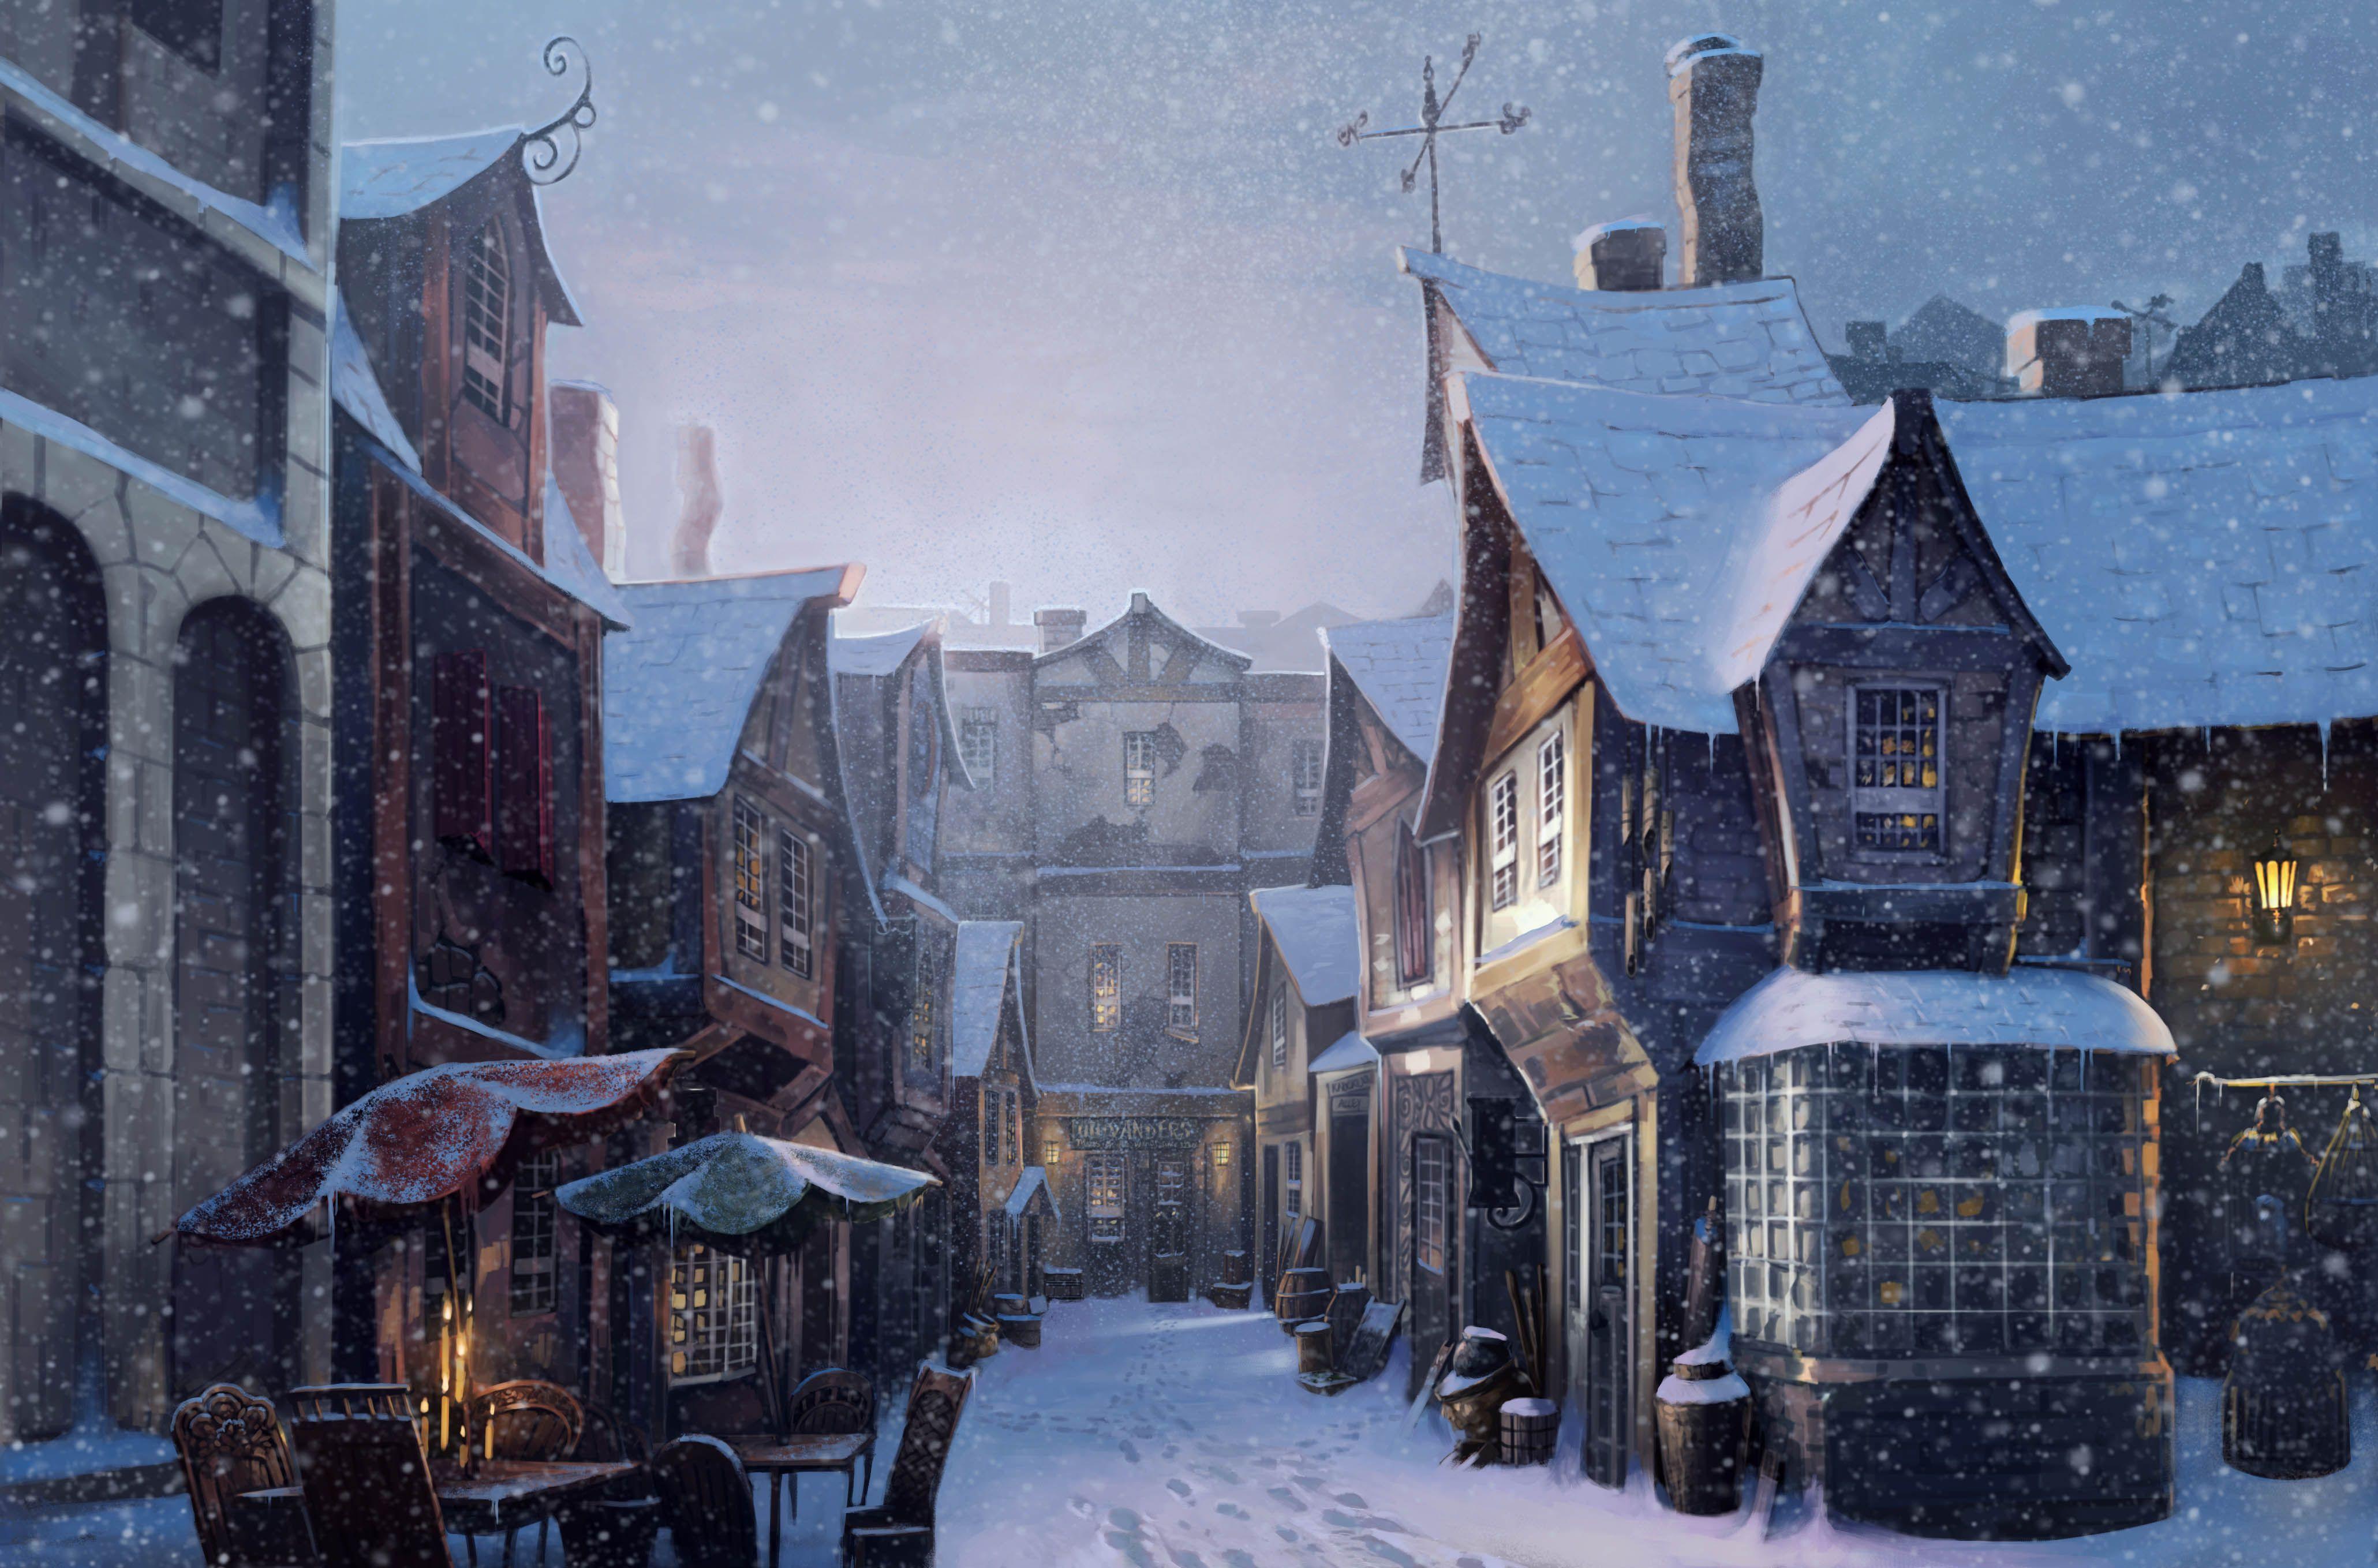 Diagon Alley in the snow. awsmmmmmmmmm. Snow, Harry